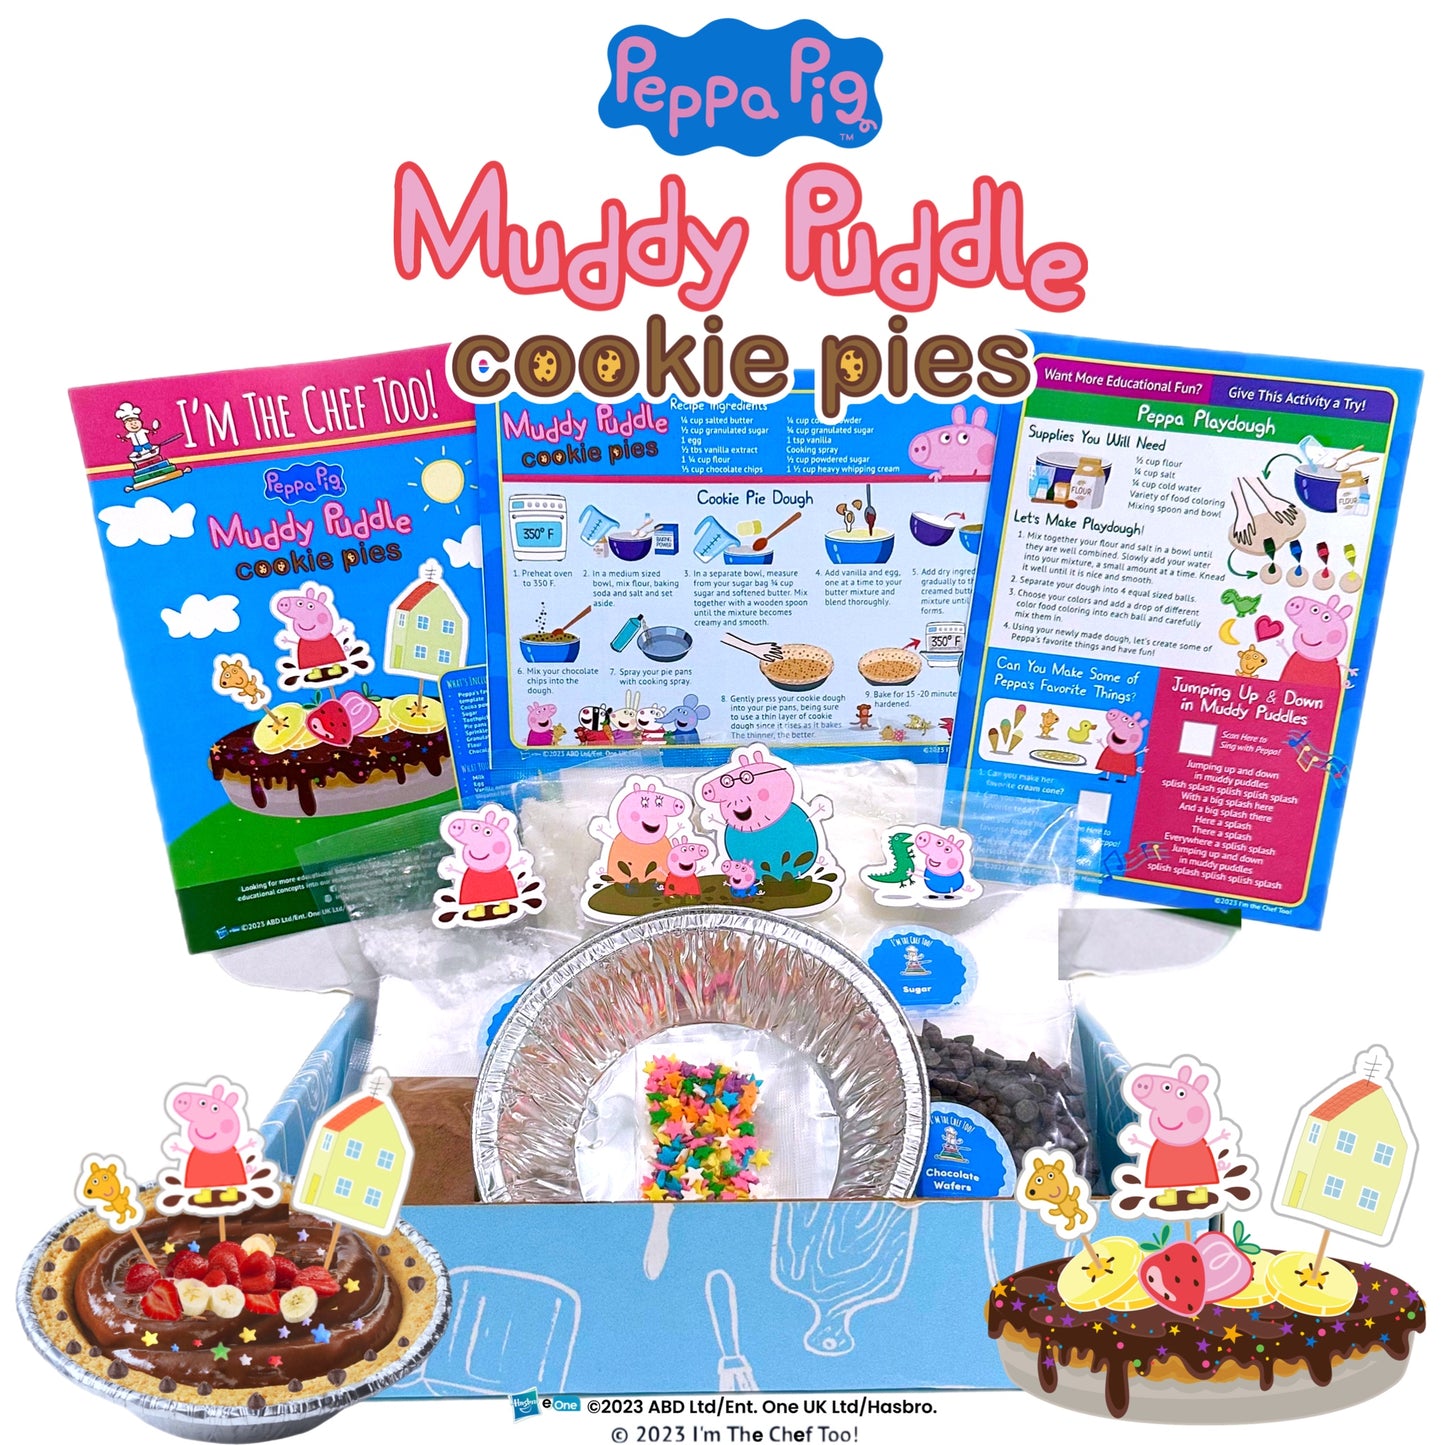 NEW! Peppa Pig Muddy Puddle Cookie Pies